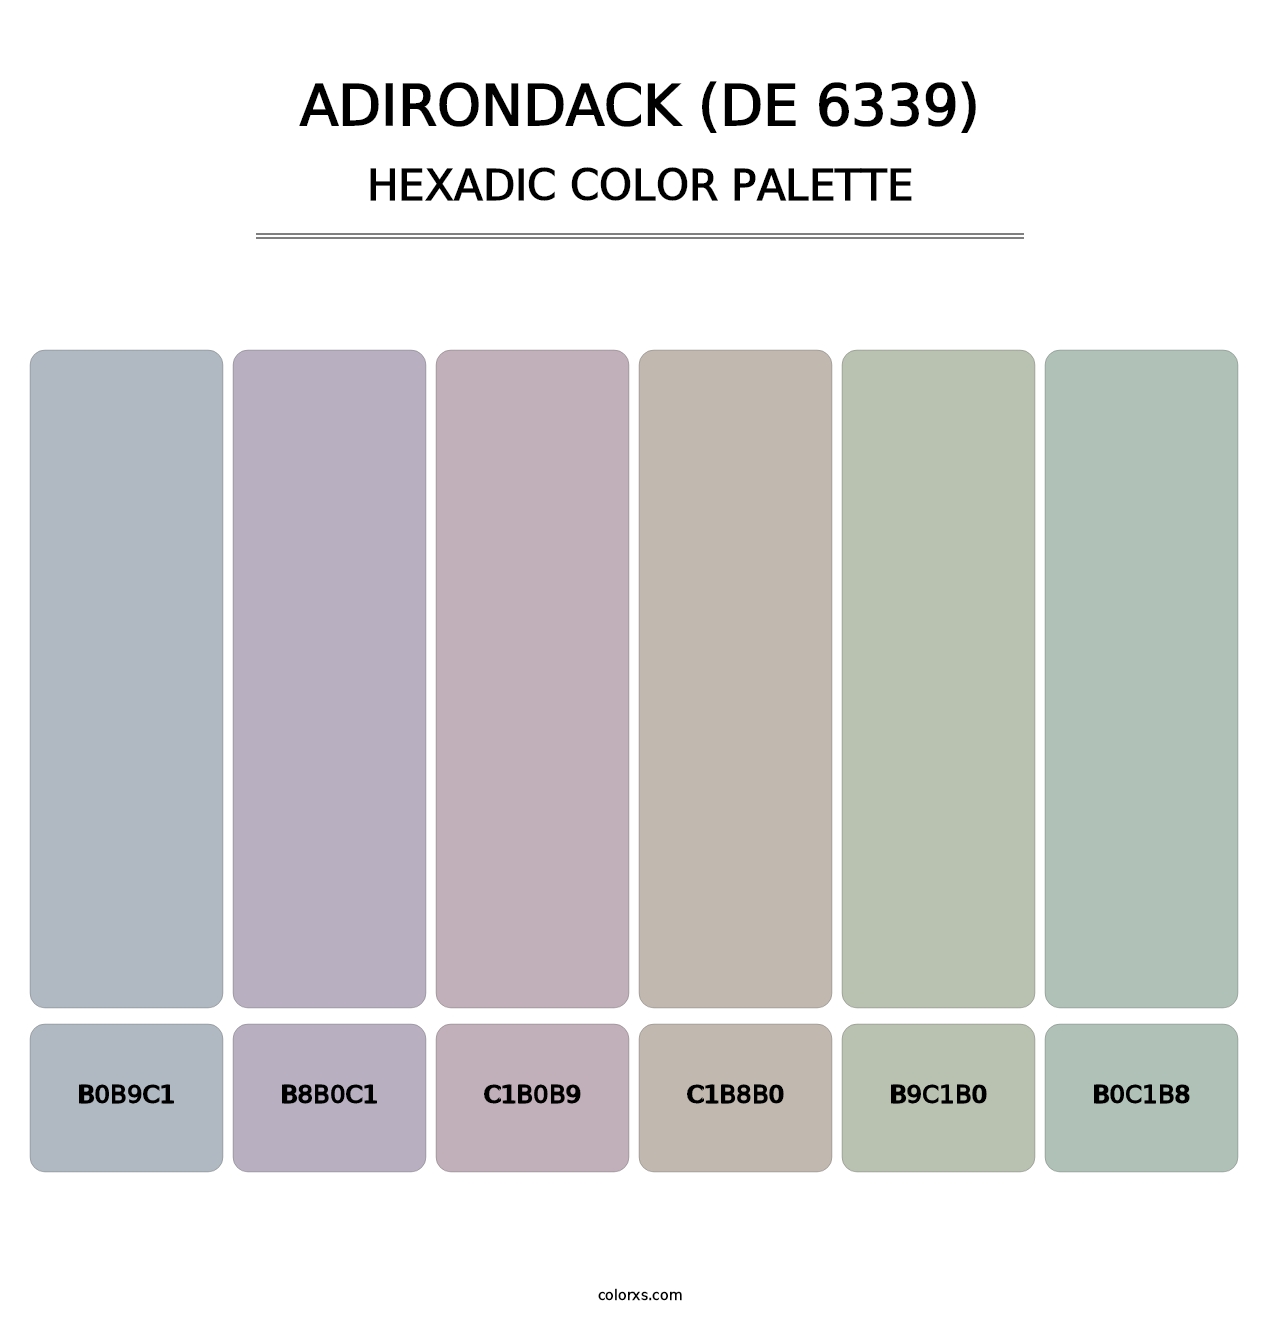 Adirondack (DE 6339) - Hexadic Color Palette